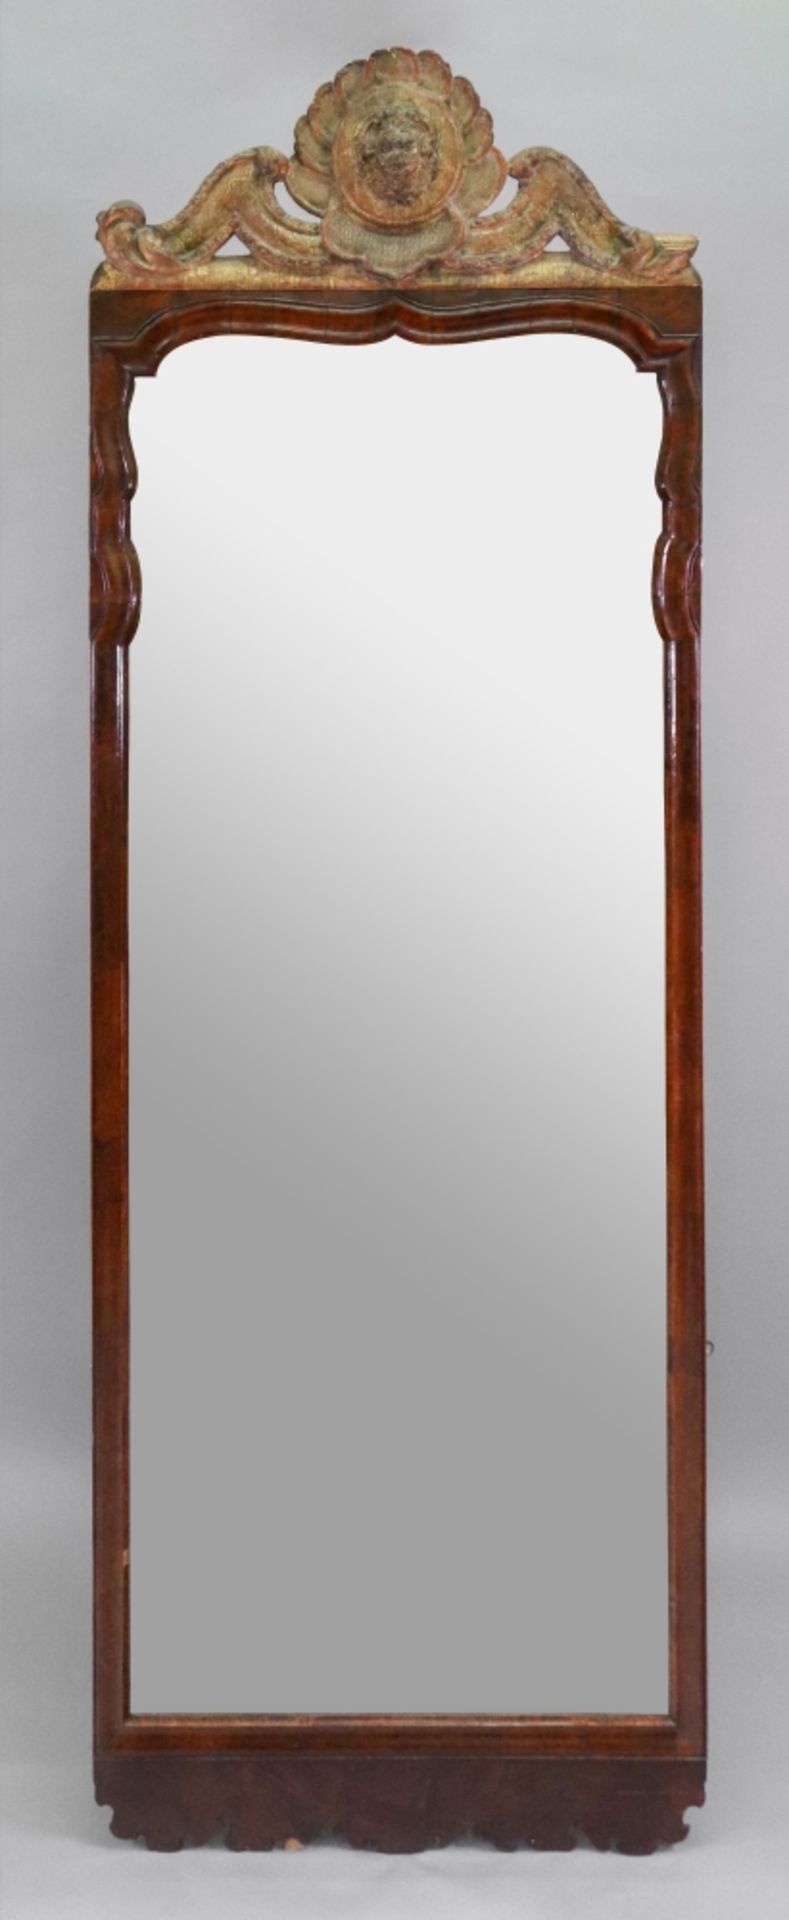 A tall early 18th century walnut frame upright wall mirror,